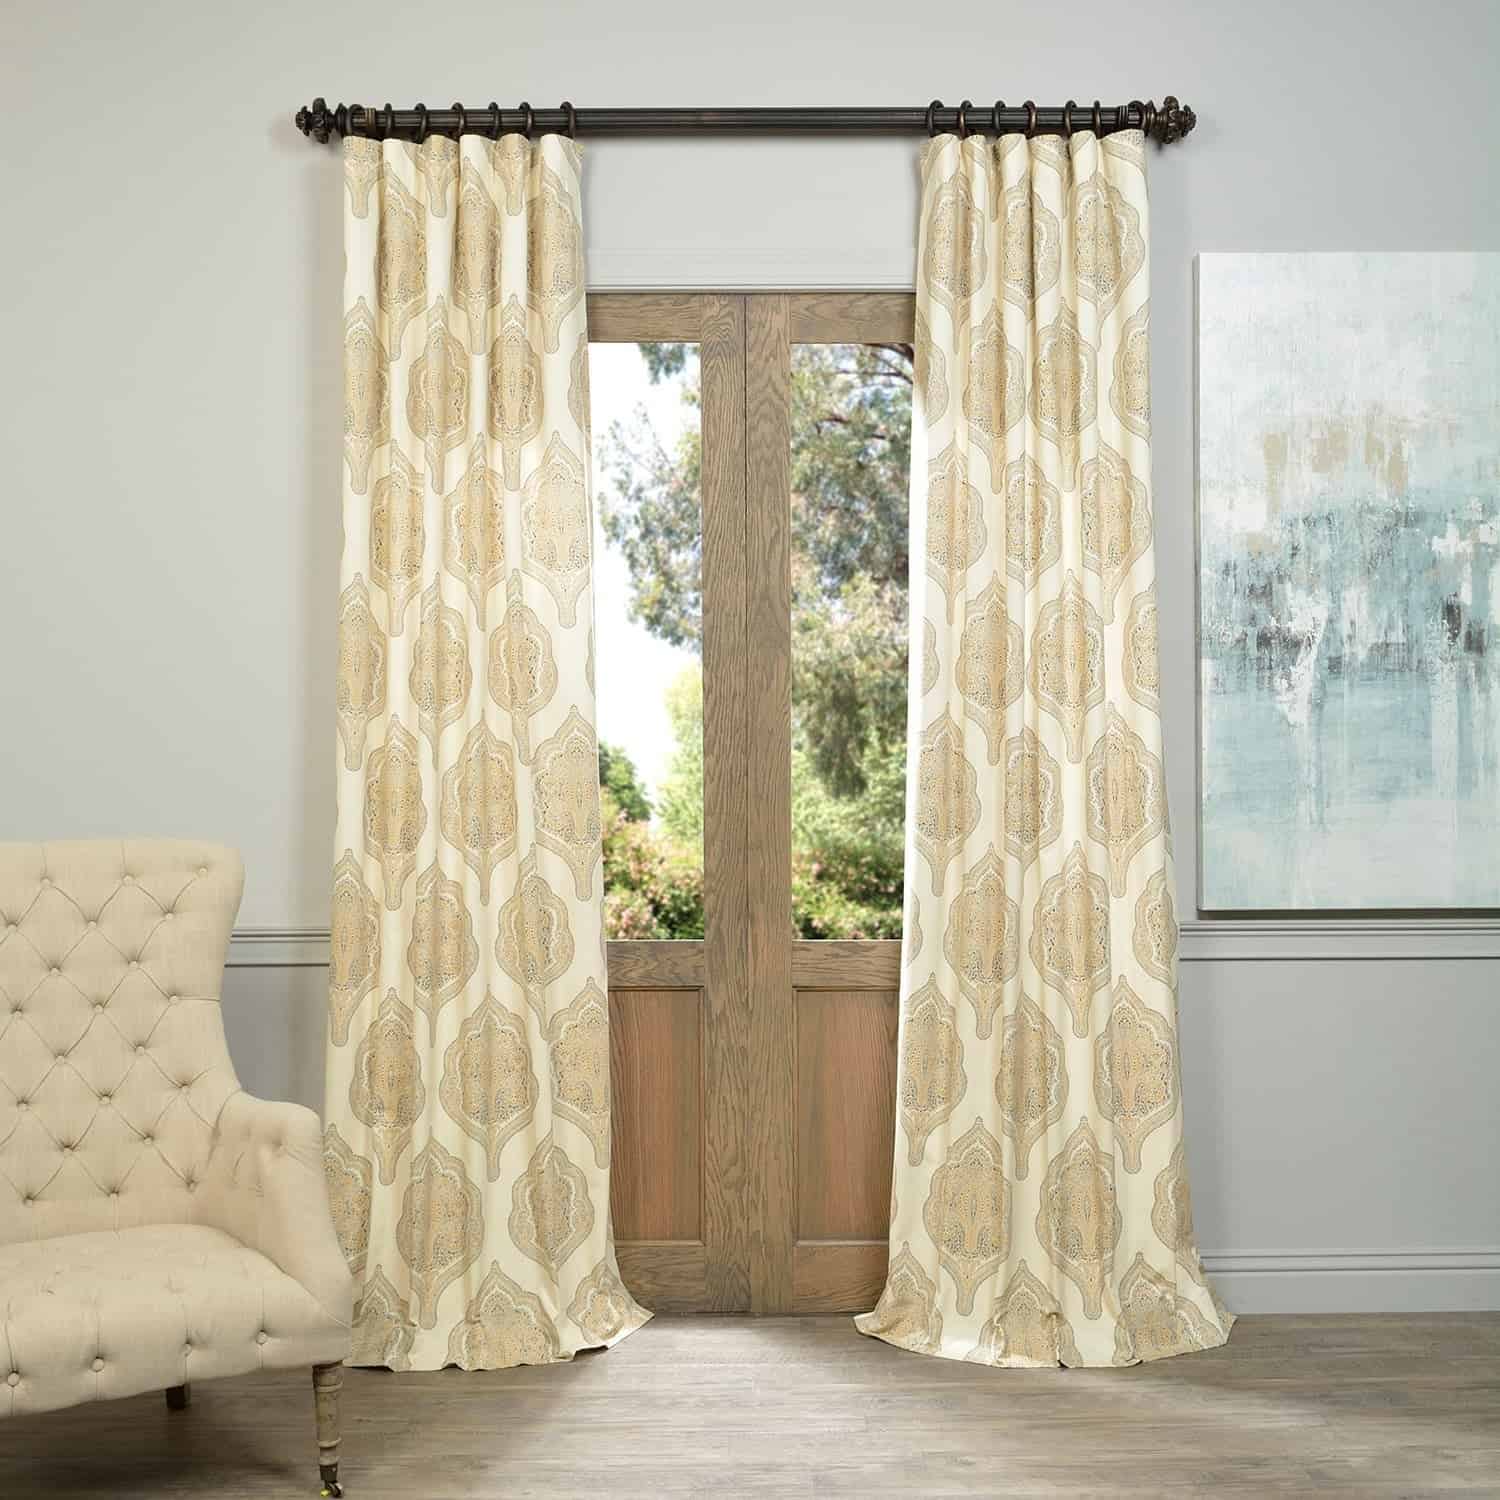 Arabesque Pattern Curtains Are Forever Elegant